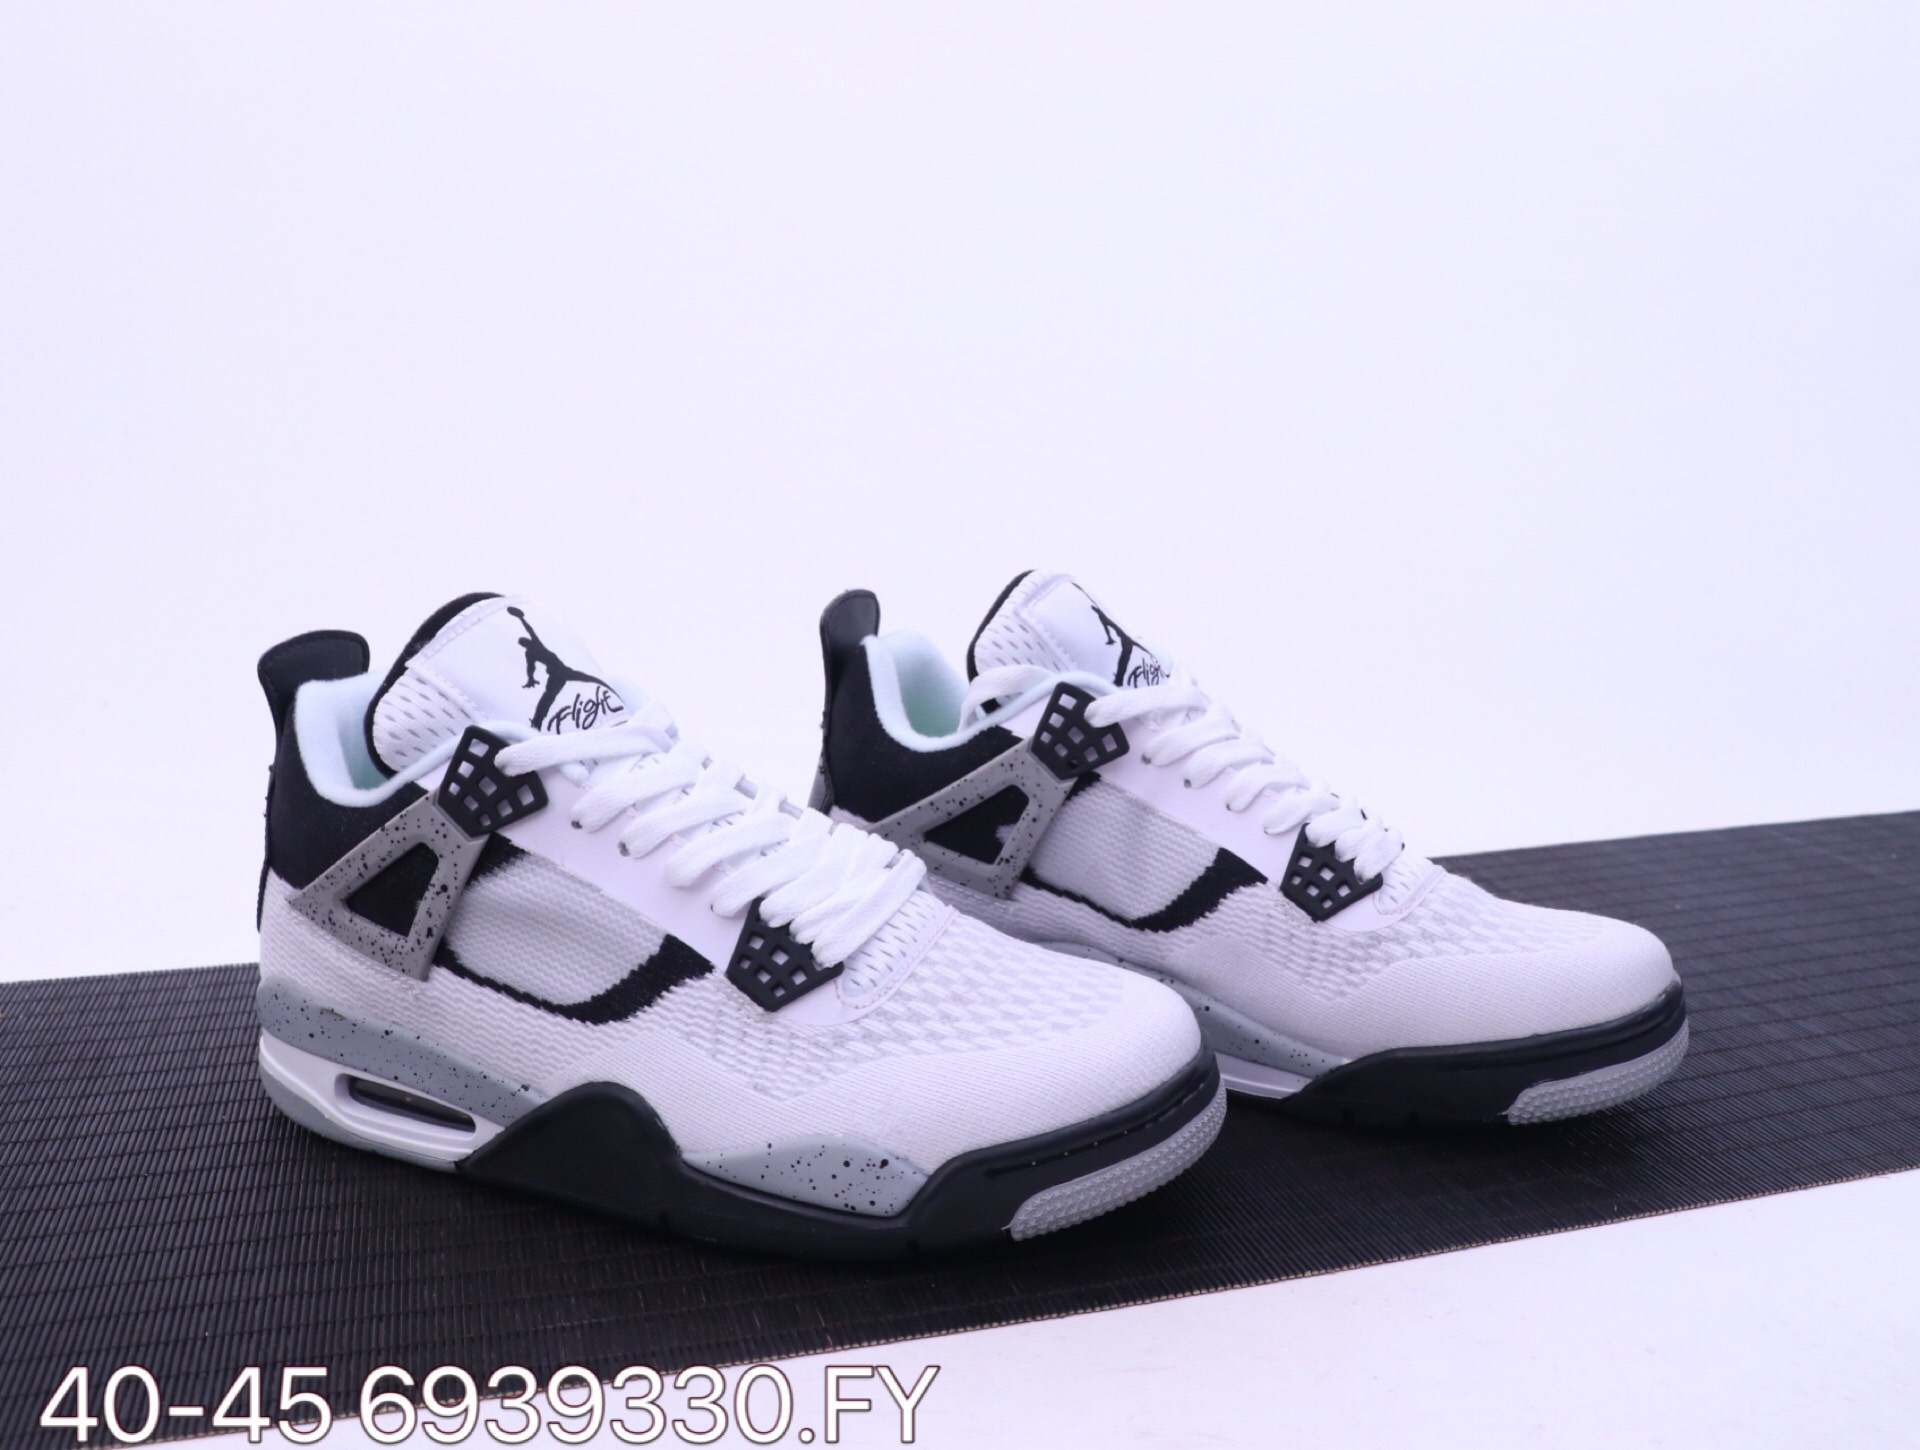 Air Jordan 4 Retro NRG White Black Grey Shoes